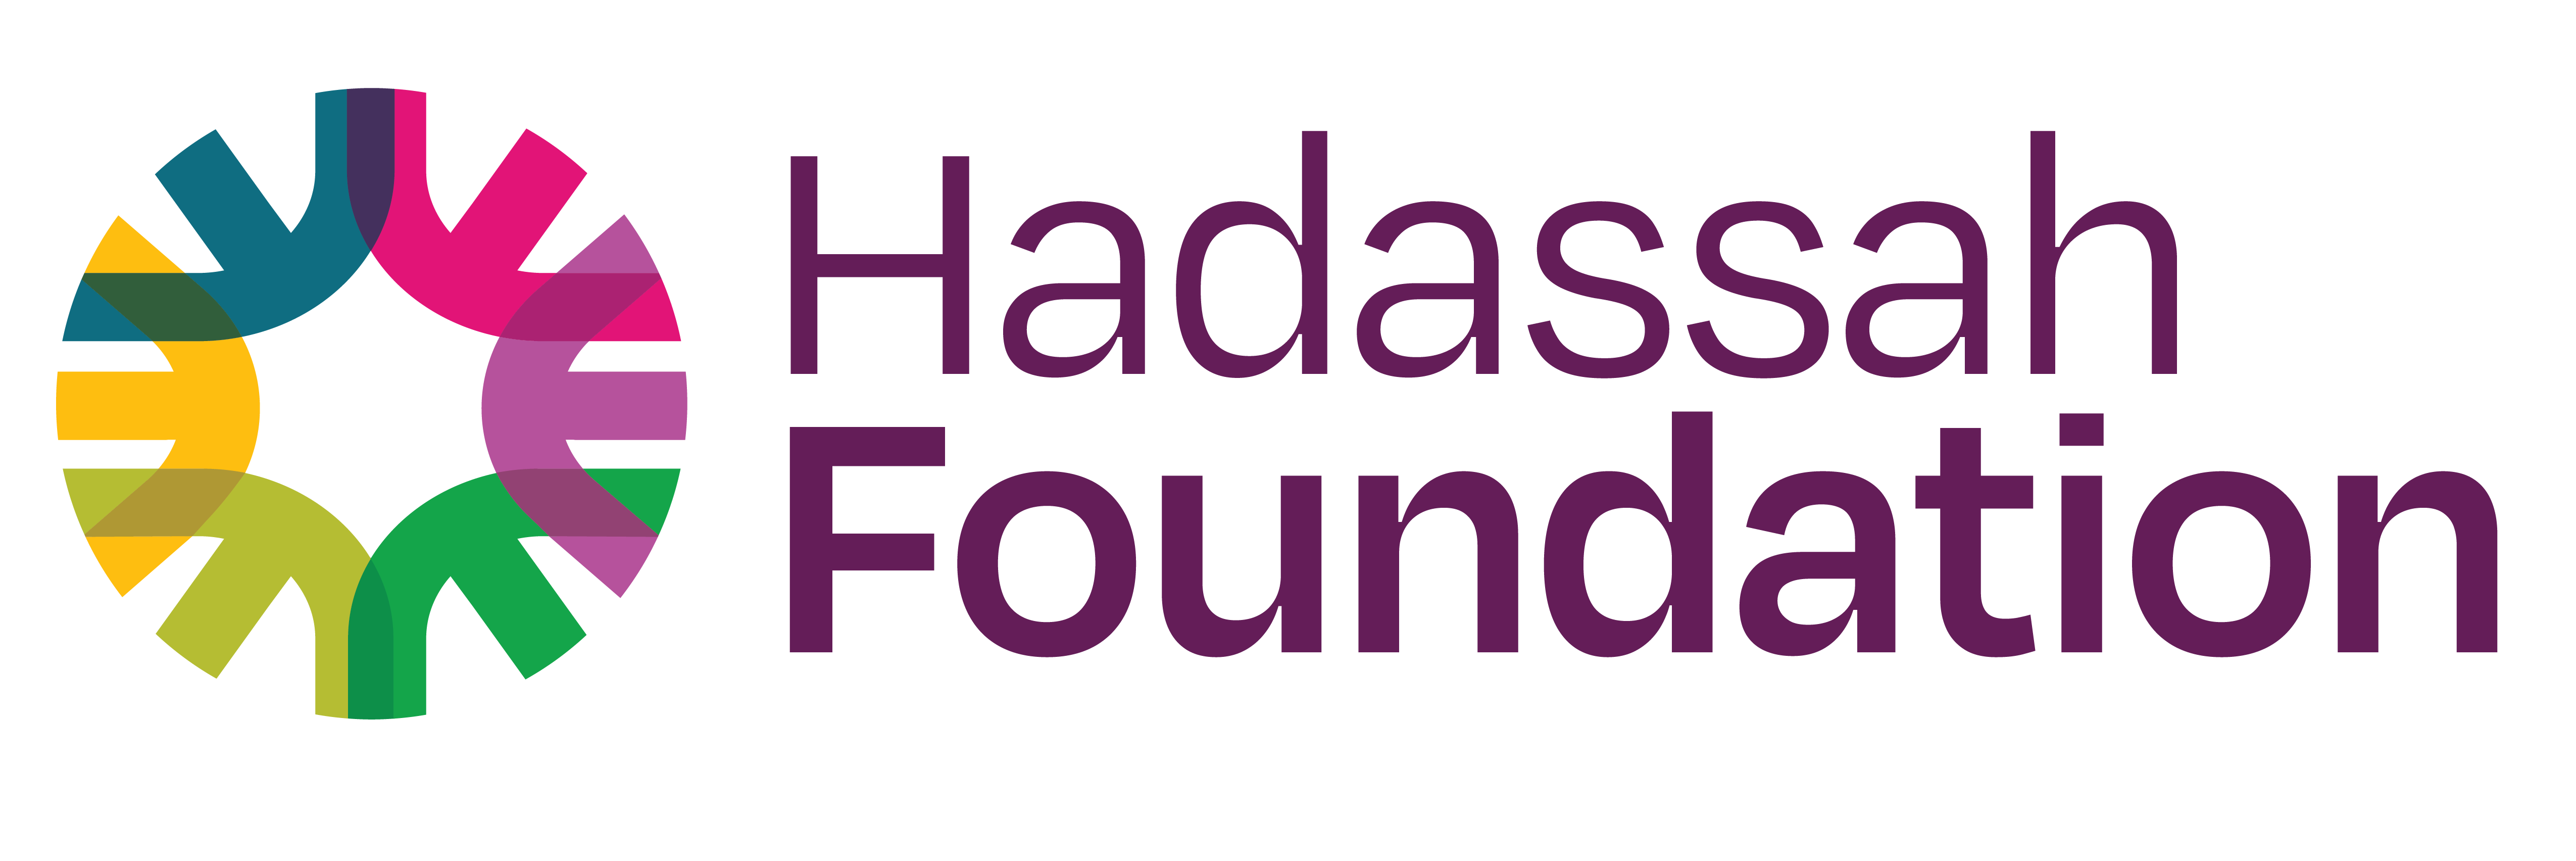 Hadassah Foundation Logo Horz no Tagline